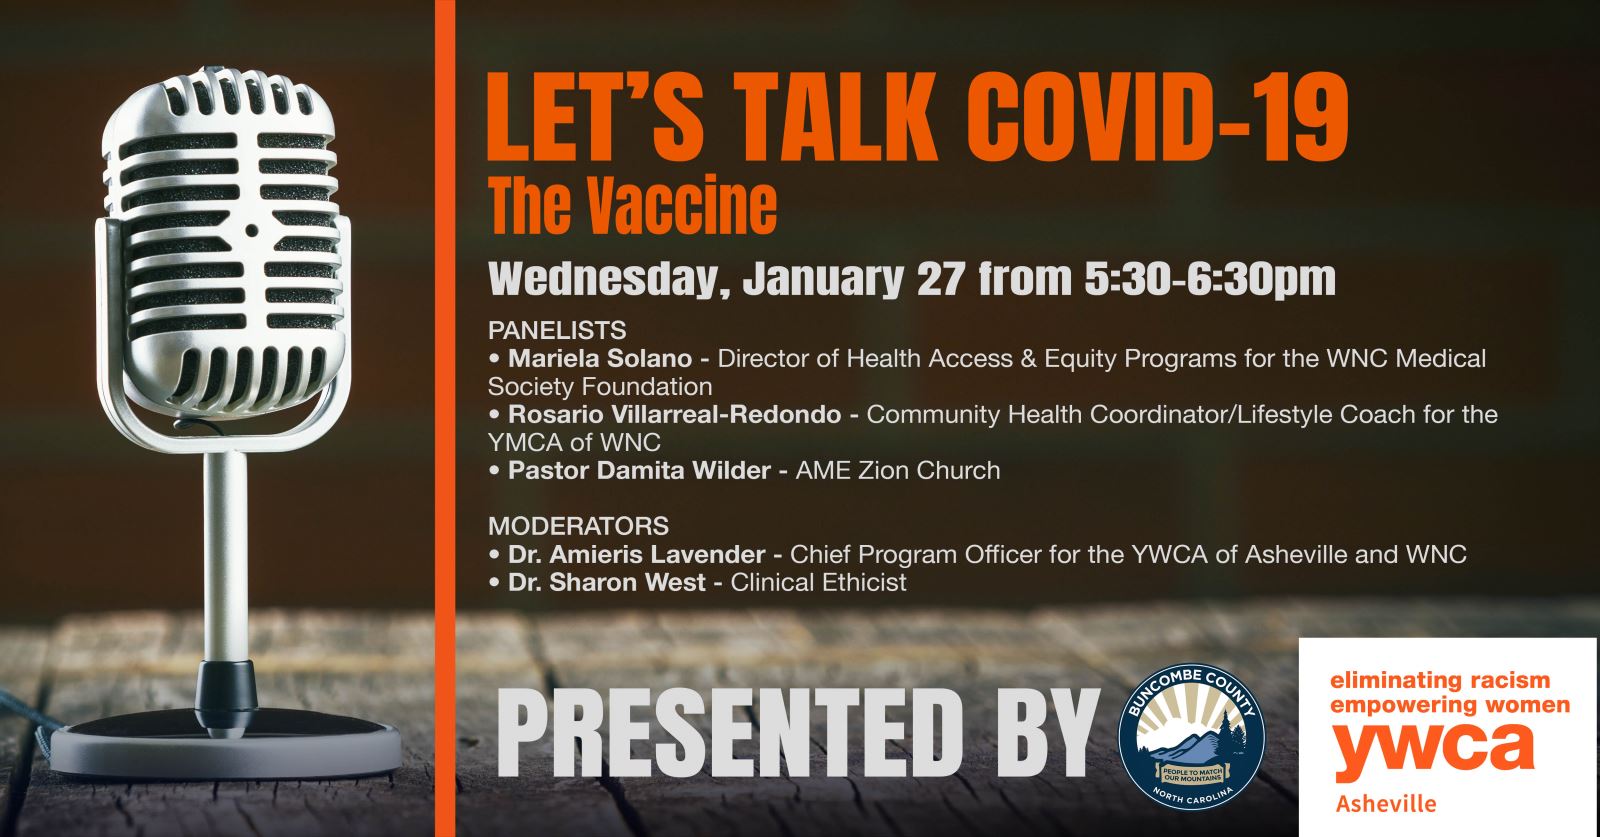 Let's Talk COVID 19 Vaccine Speakers